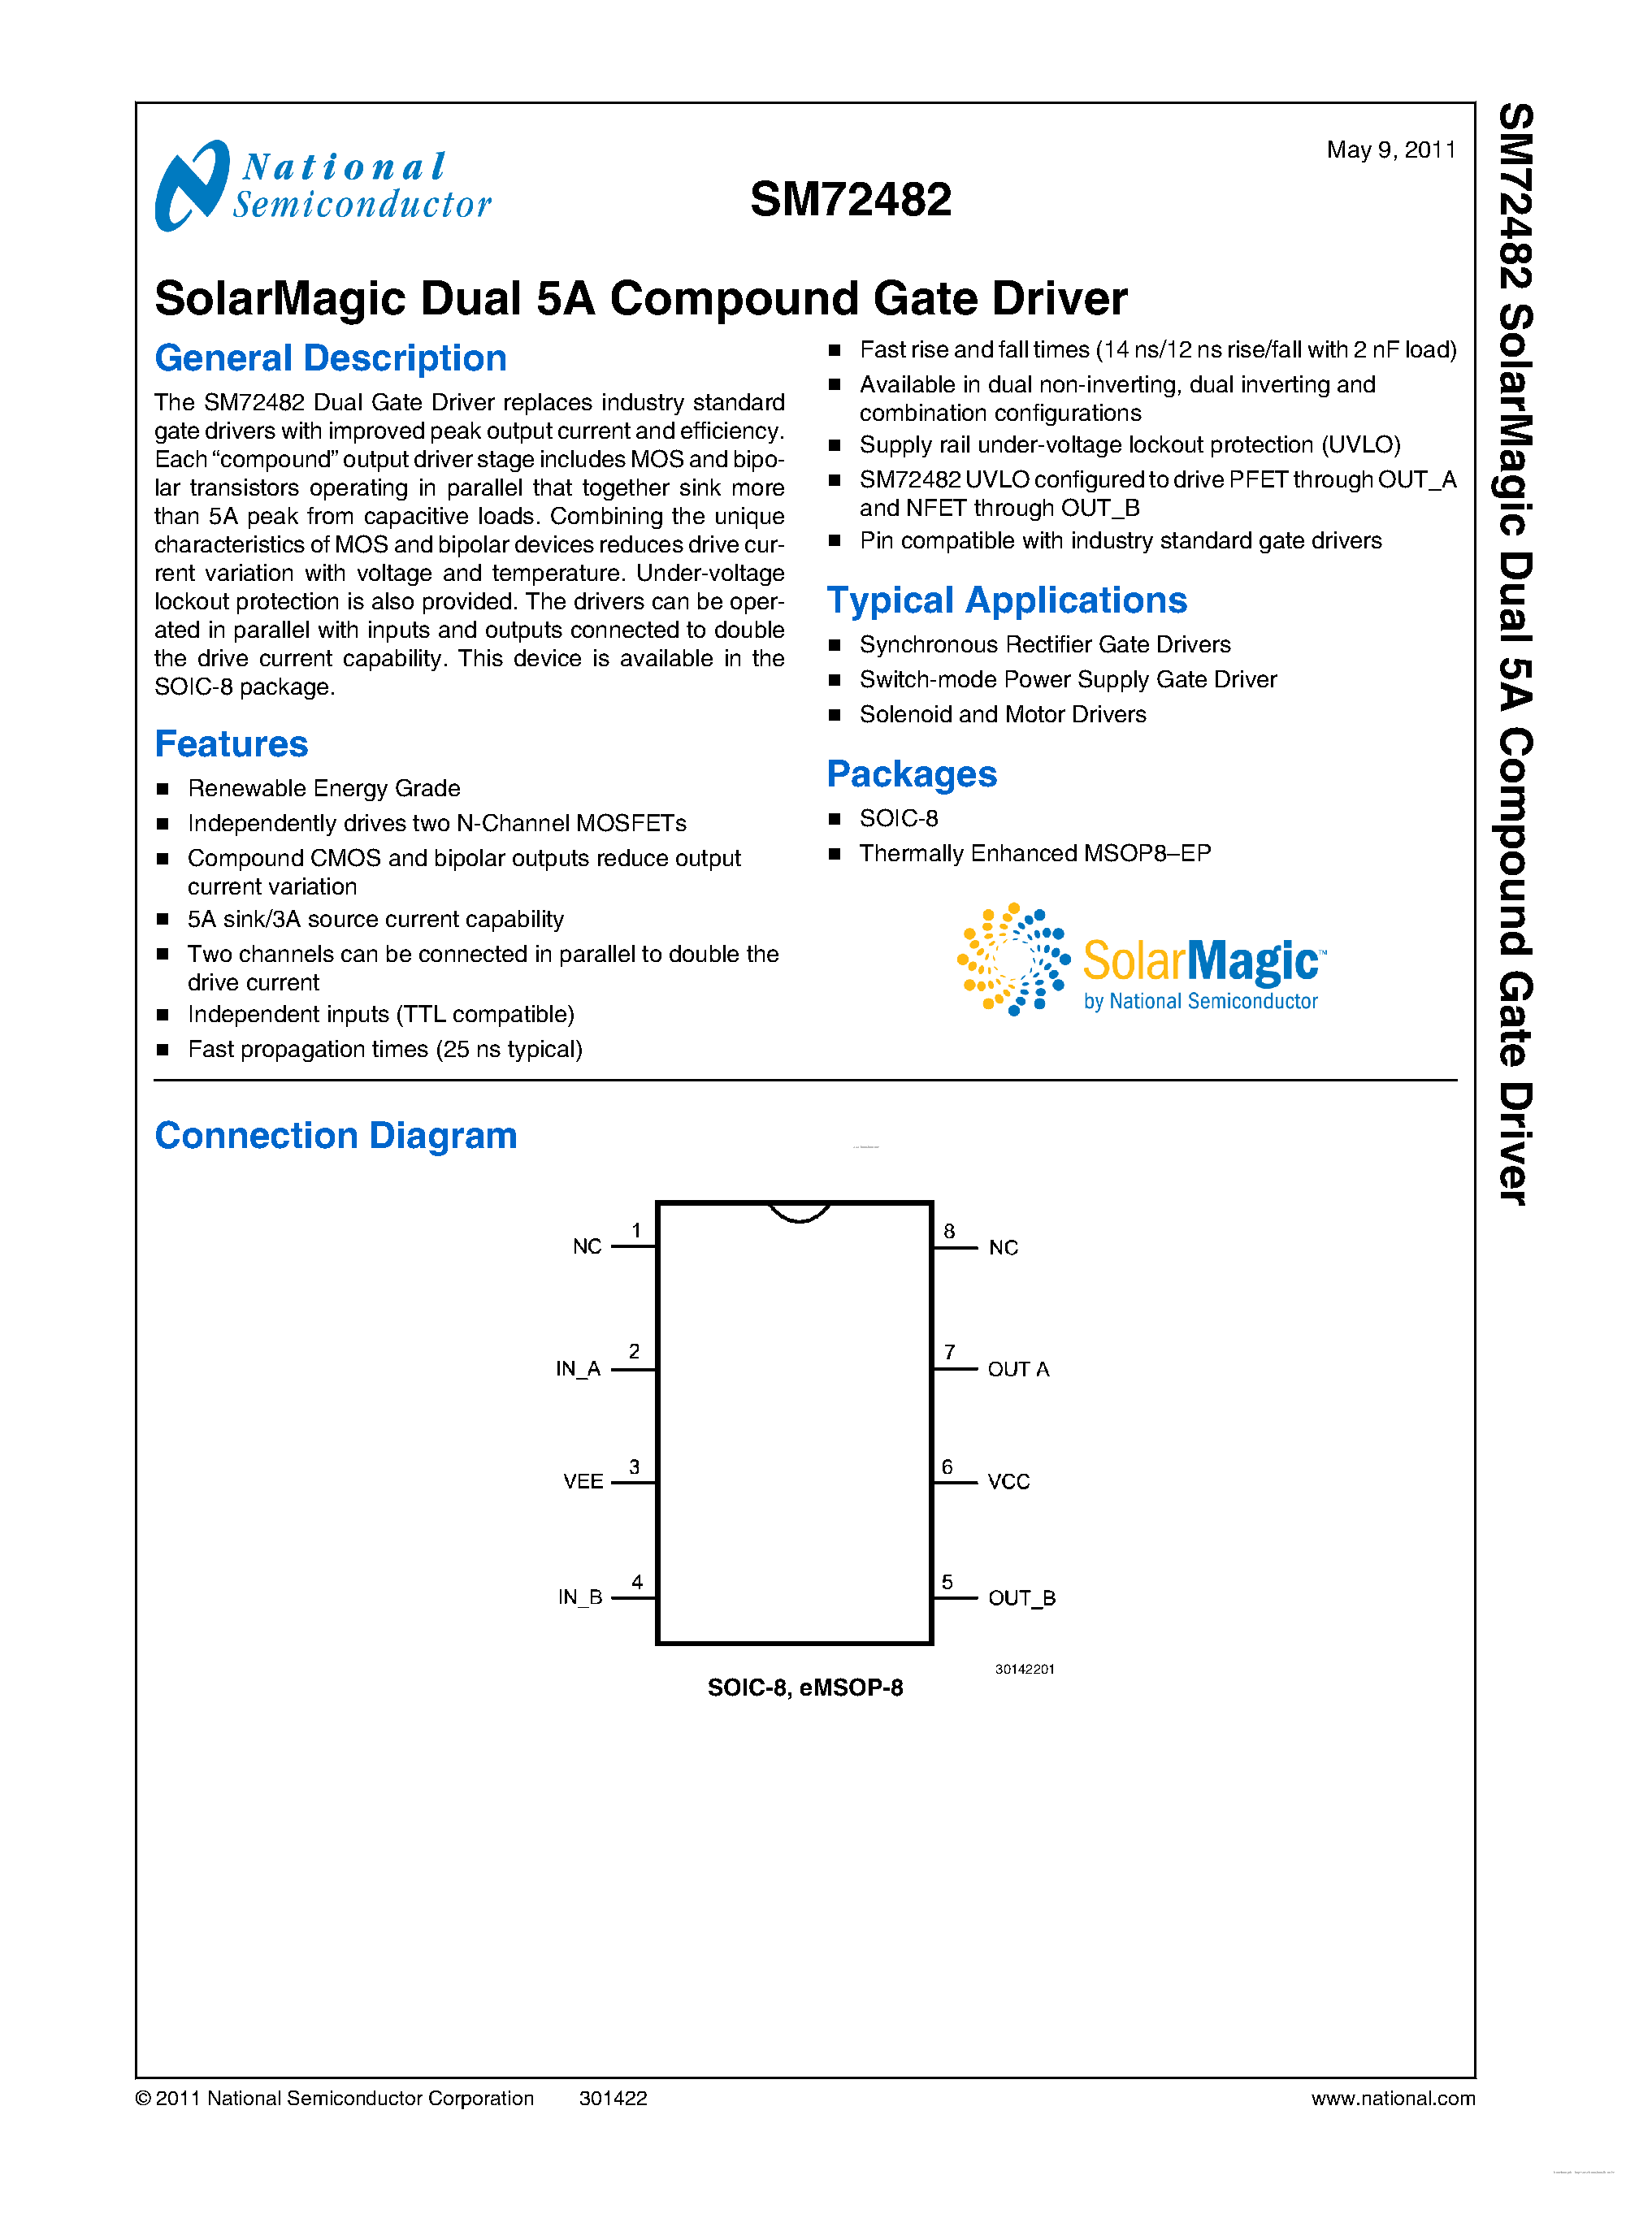 Datasheet SM72482 - SolarMagic Dual 5A Compound Gate Driver page 2